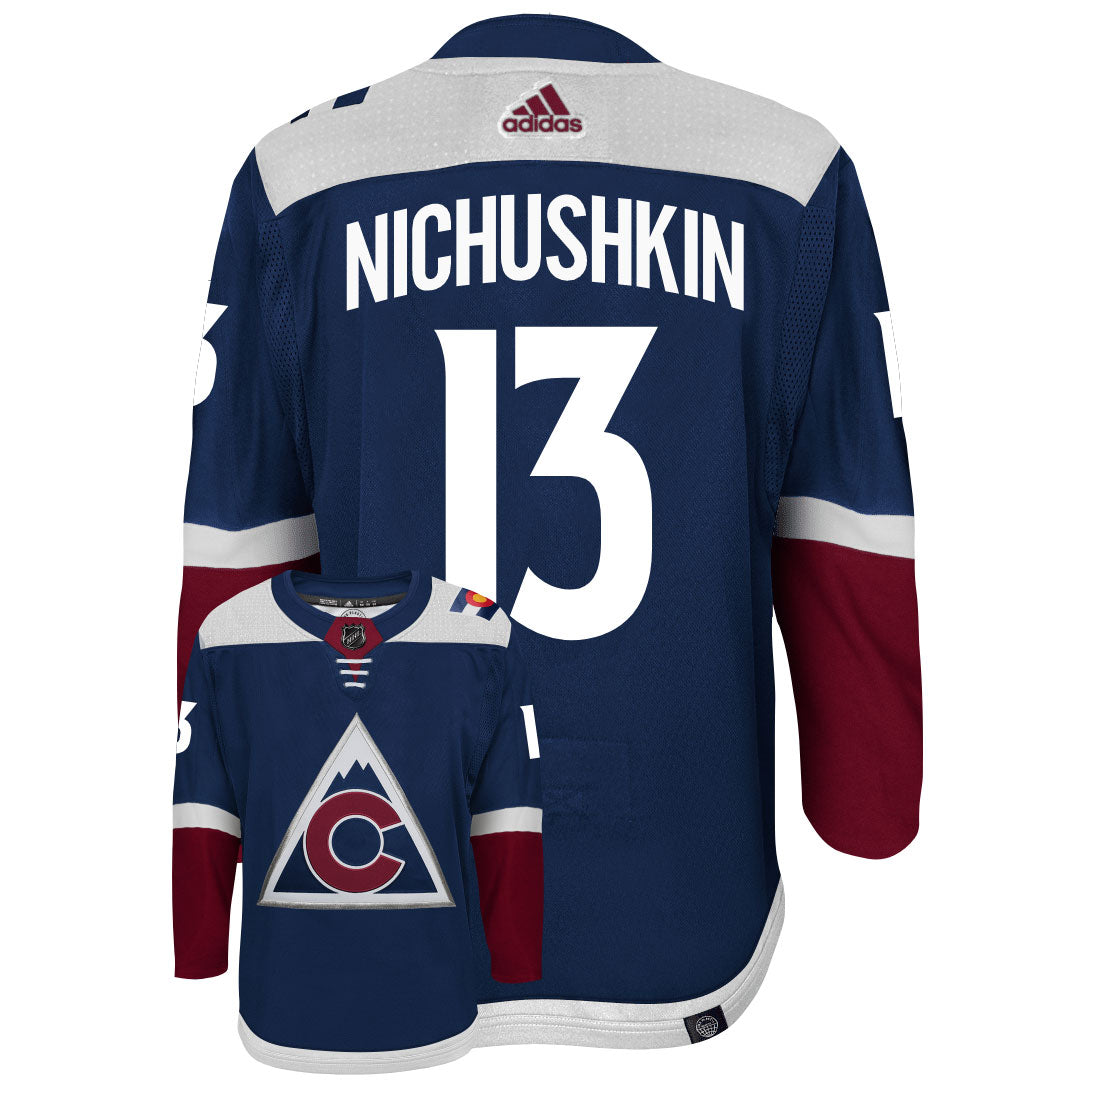 Valeri Nichushkin Colorado Avalanche Adidas Primegreen Authentic Third Alternate NHL Hockey Jersey - Back/Front View